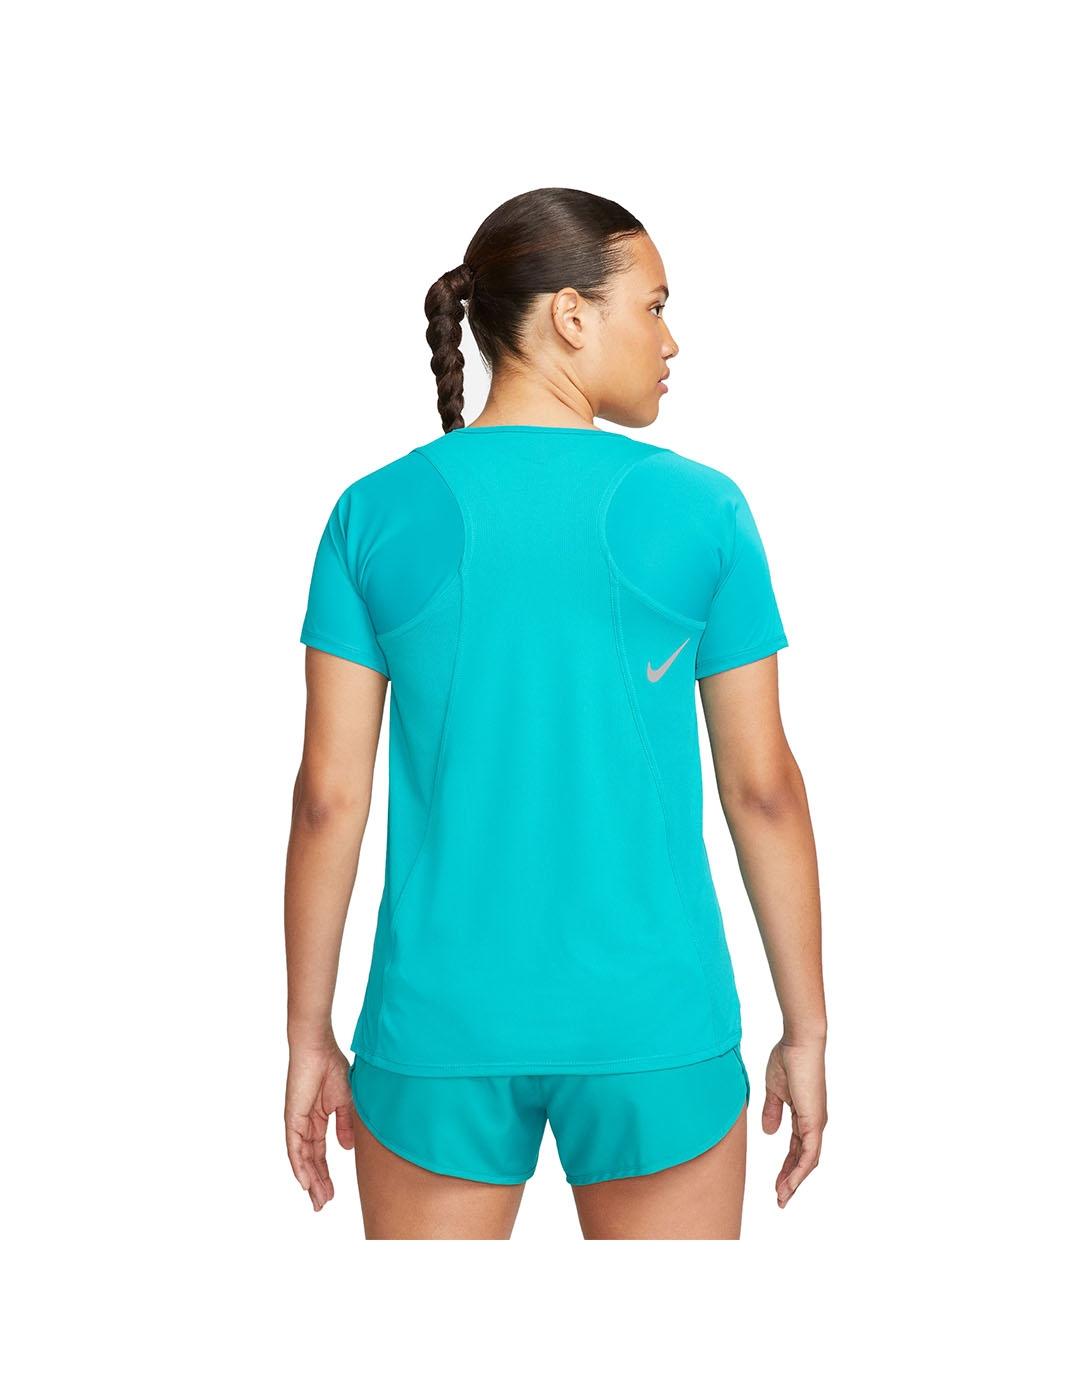 Camiseta Mujer Nike Fast Df Azul